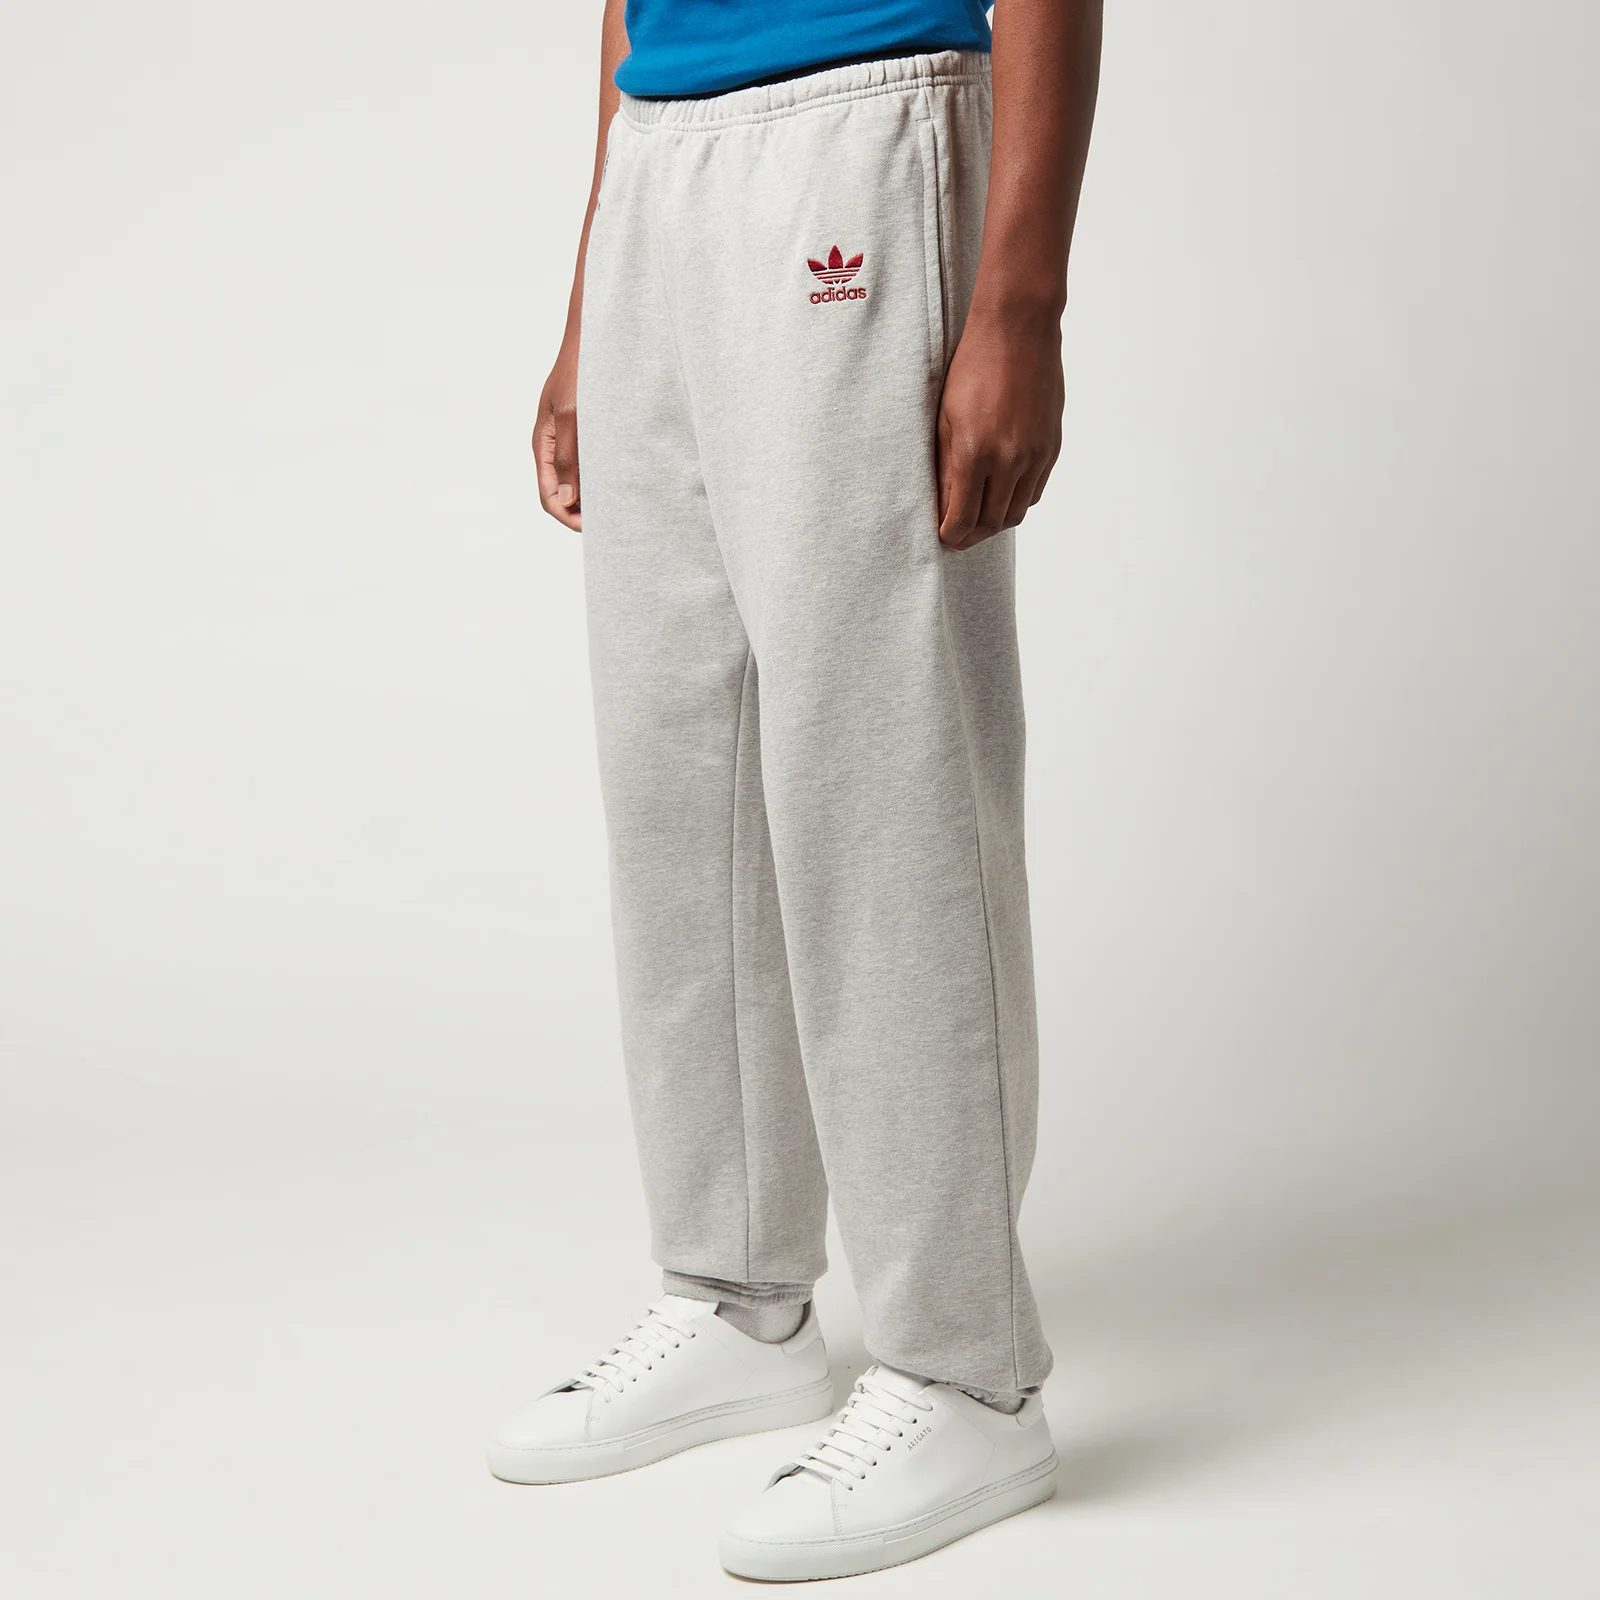 adidas X Wales Bonner Men's Fleece Pants - Medium Grey Heather Image 1